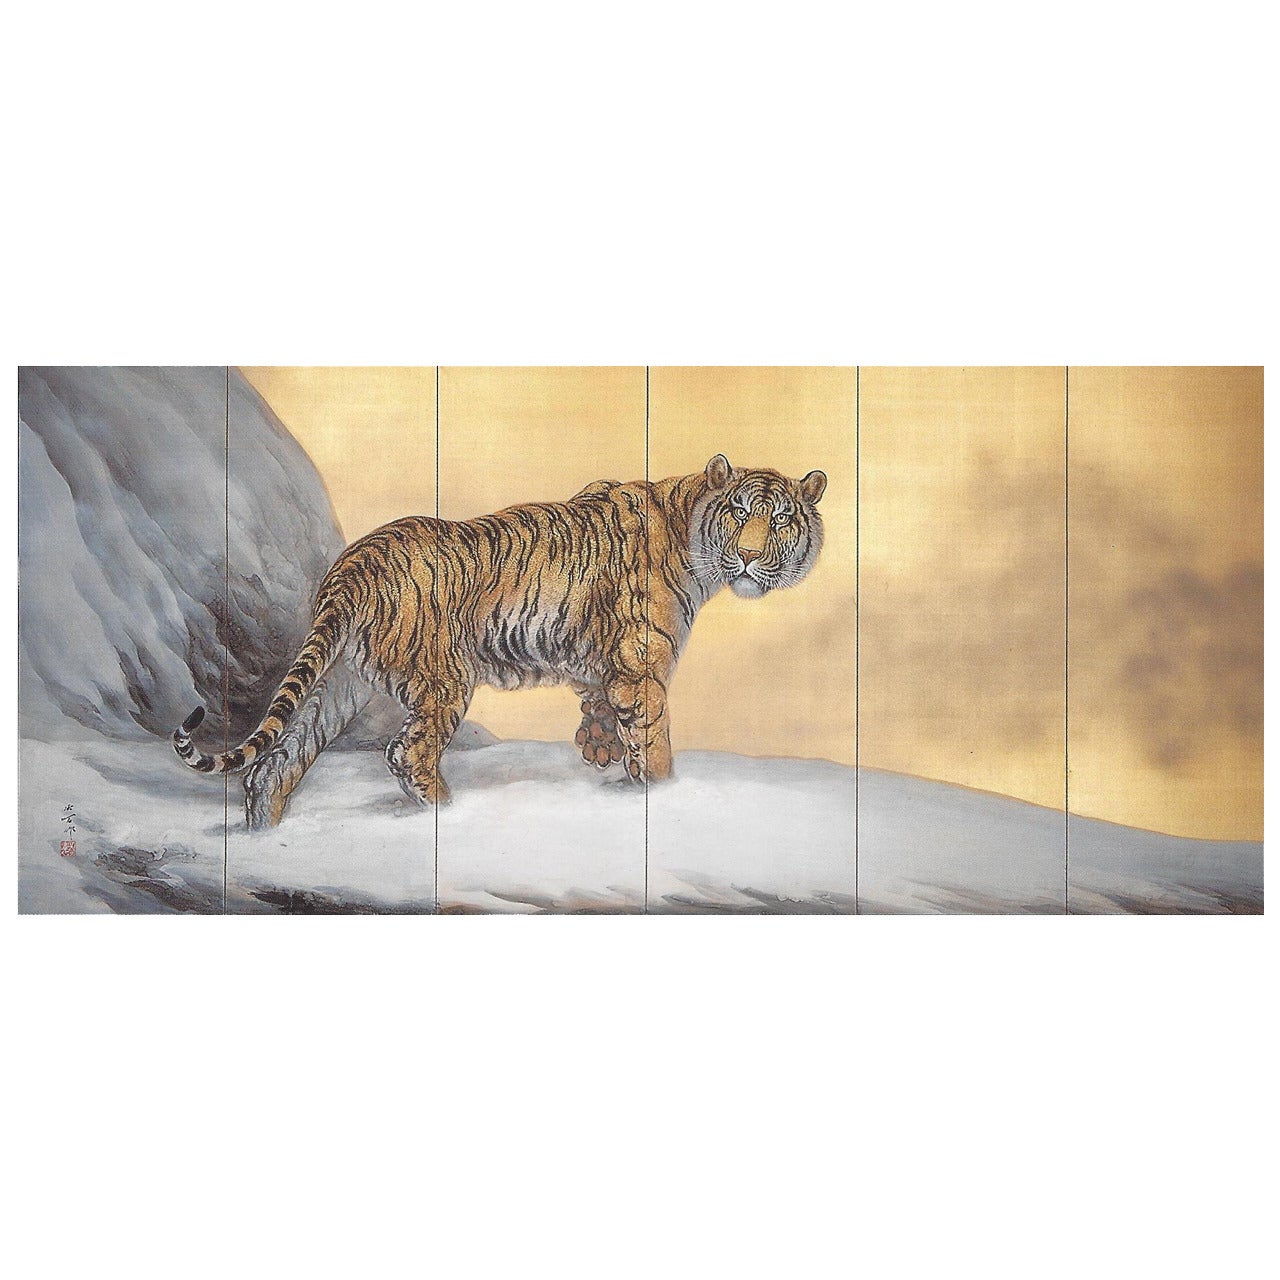 Japanese Screen "Siberian Tigers"